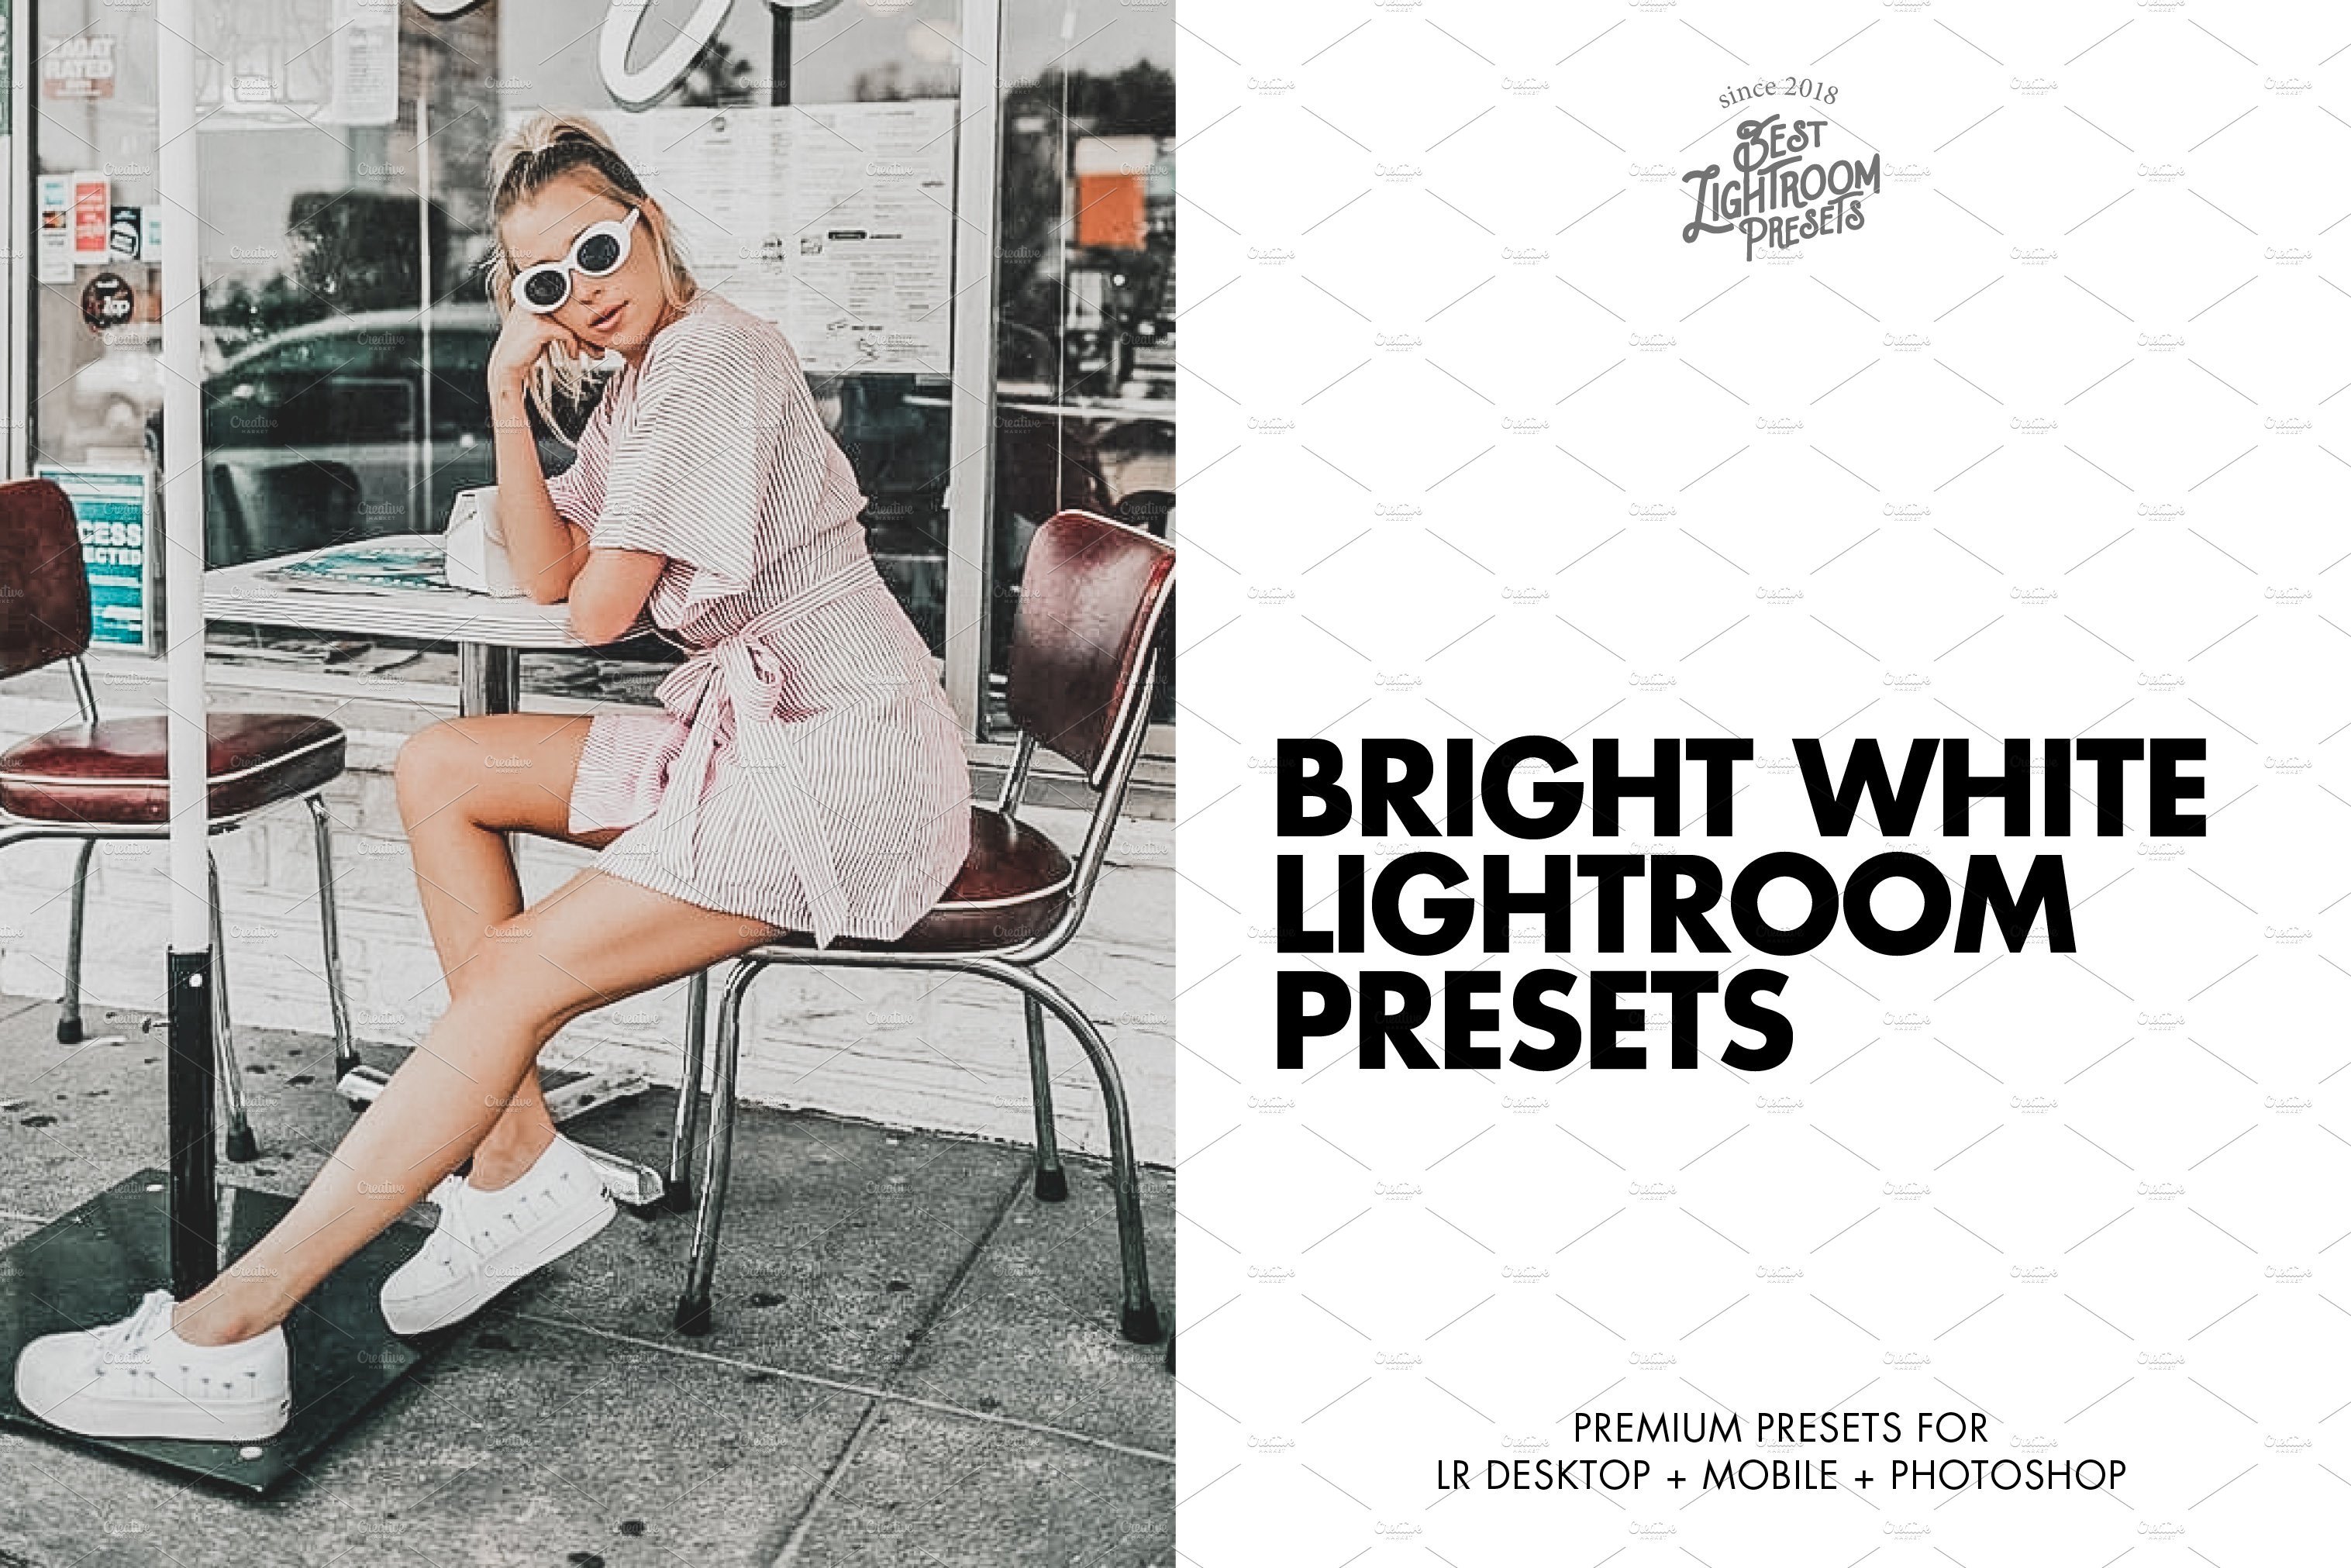 Lightroom Presets Bright Whitecover image.